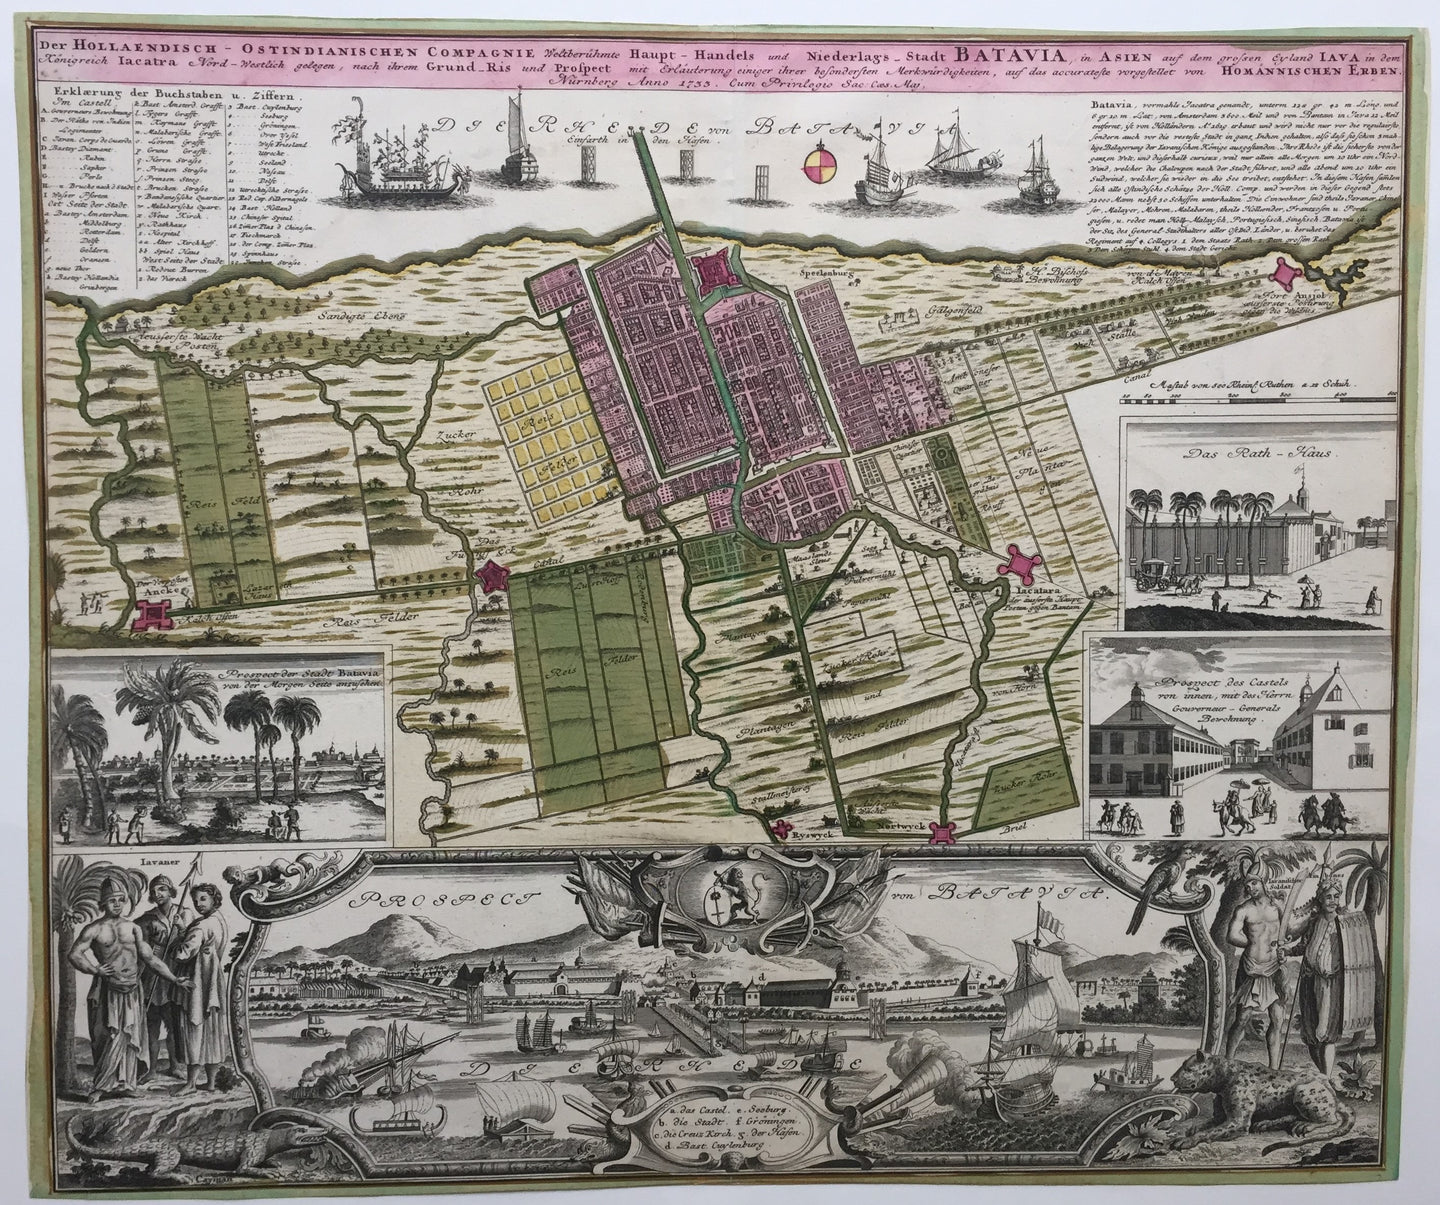 Indonesië Batavia (Jakarta) Stadsplattegrond en aanzicht - Homann Heirs (Erven Homann) - 1733